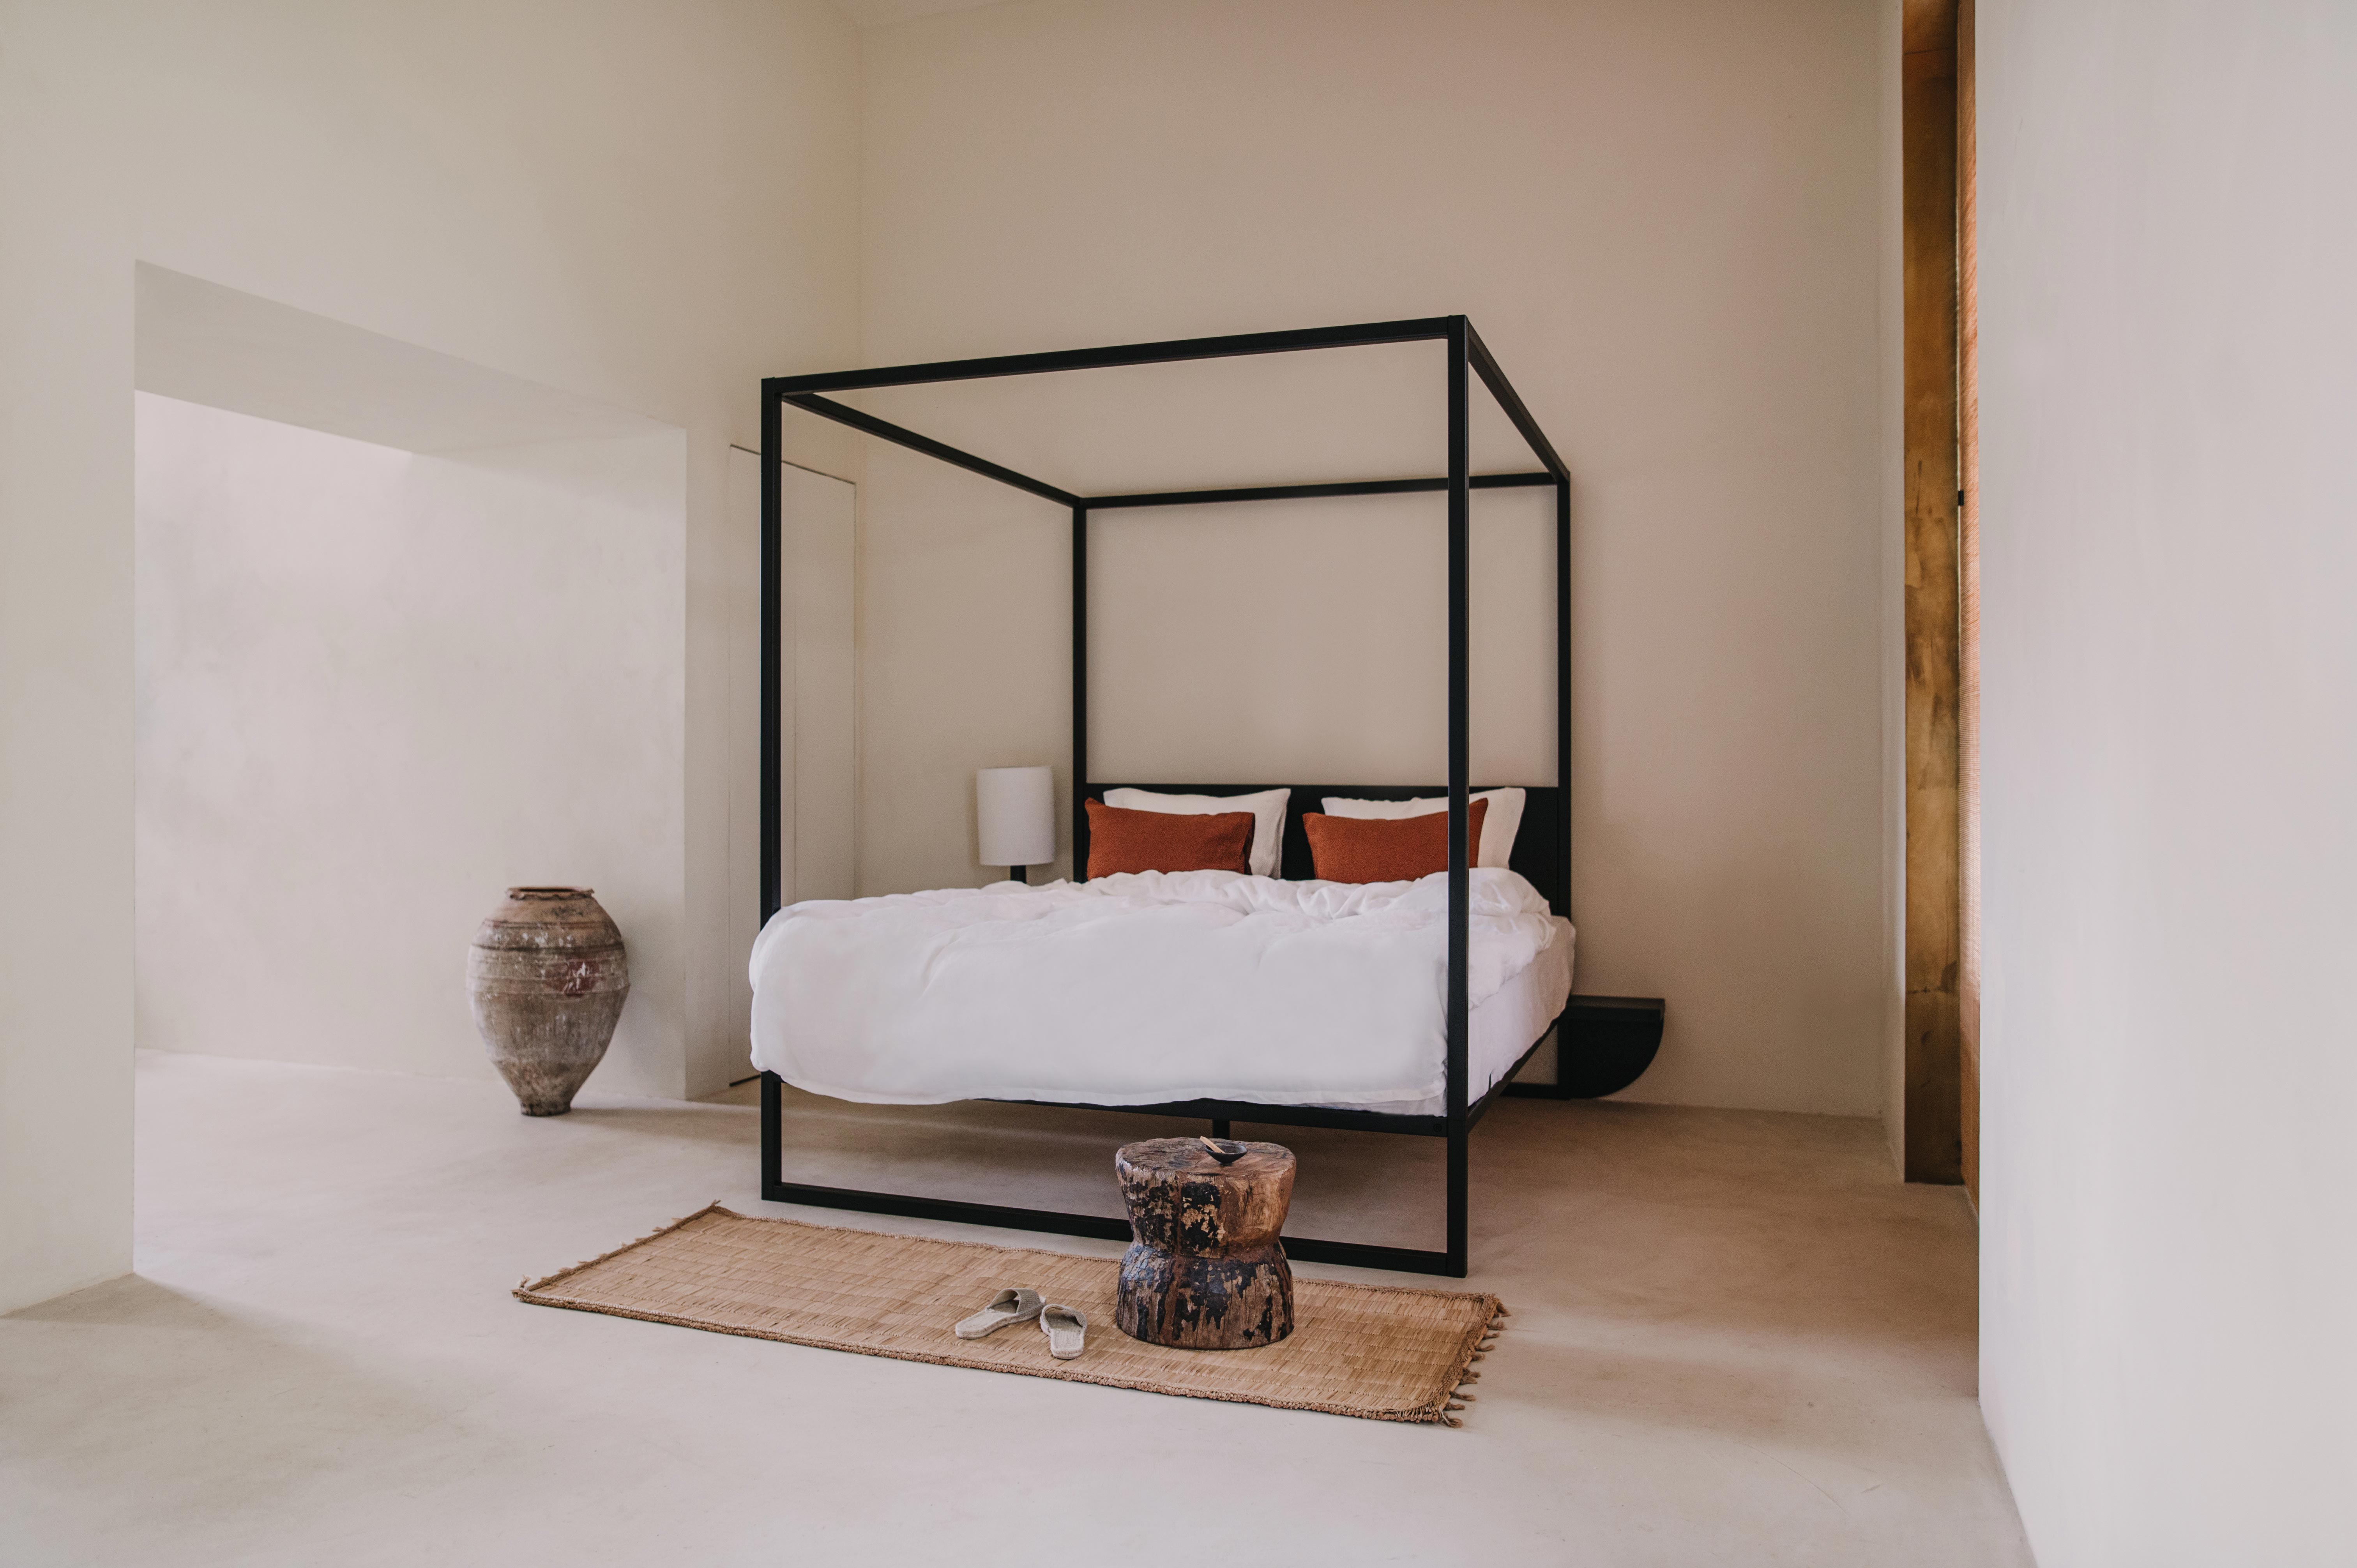 Bedframe °02 | Steel canopy bed